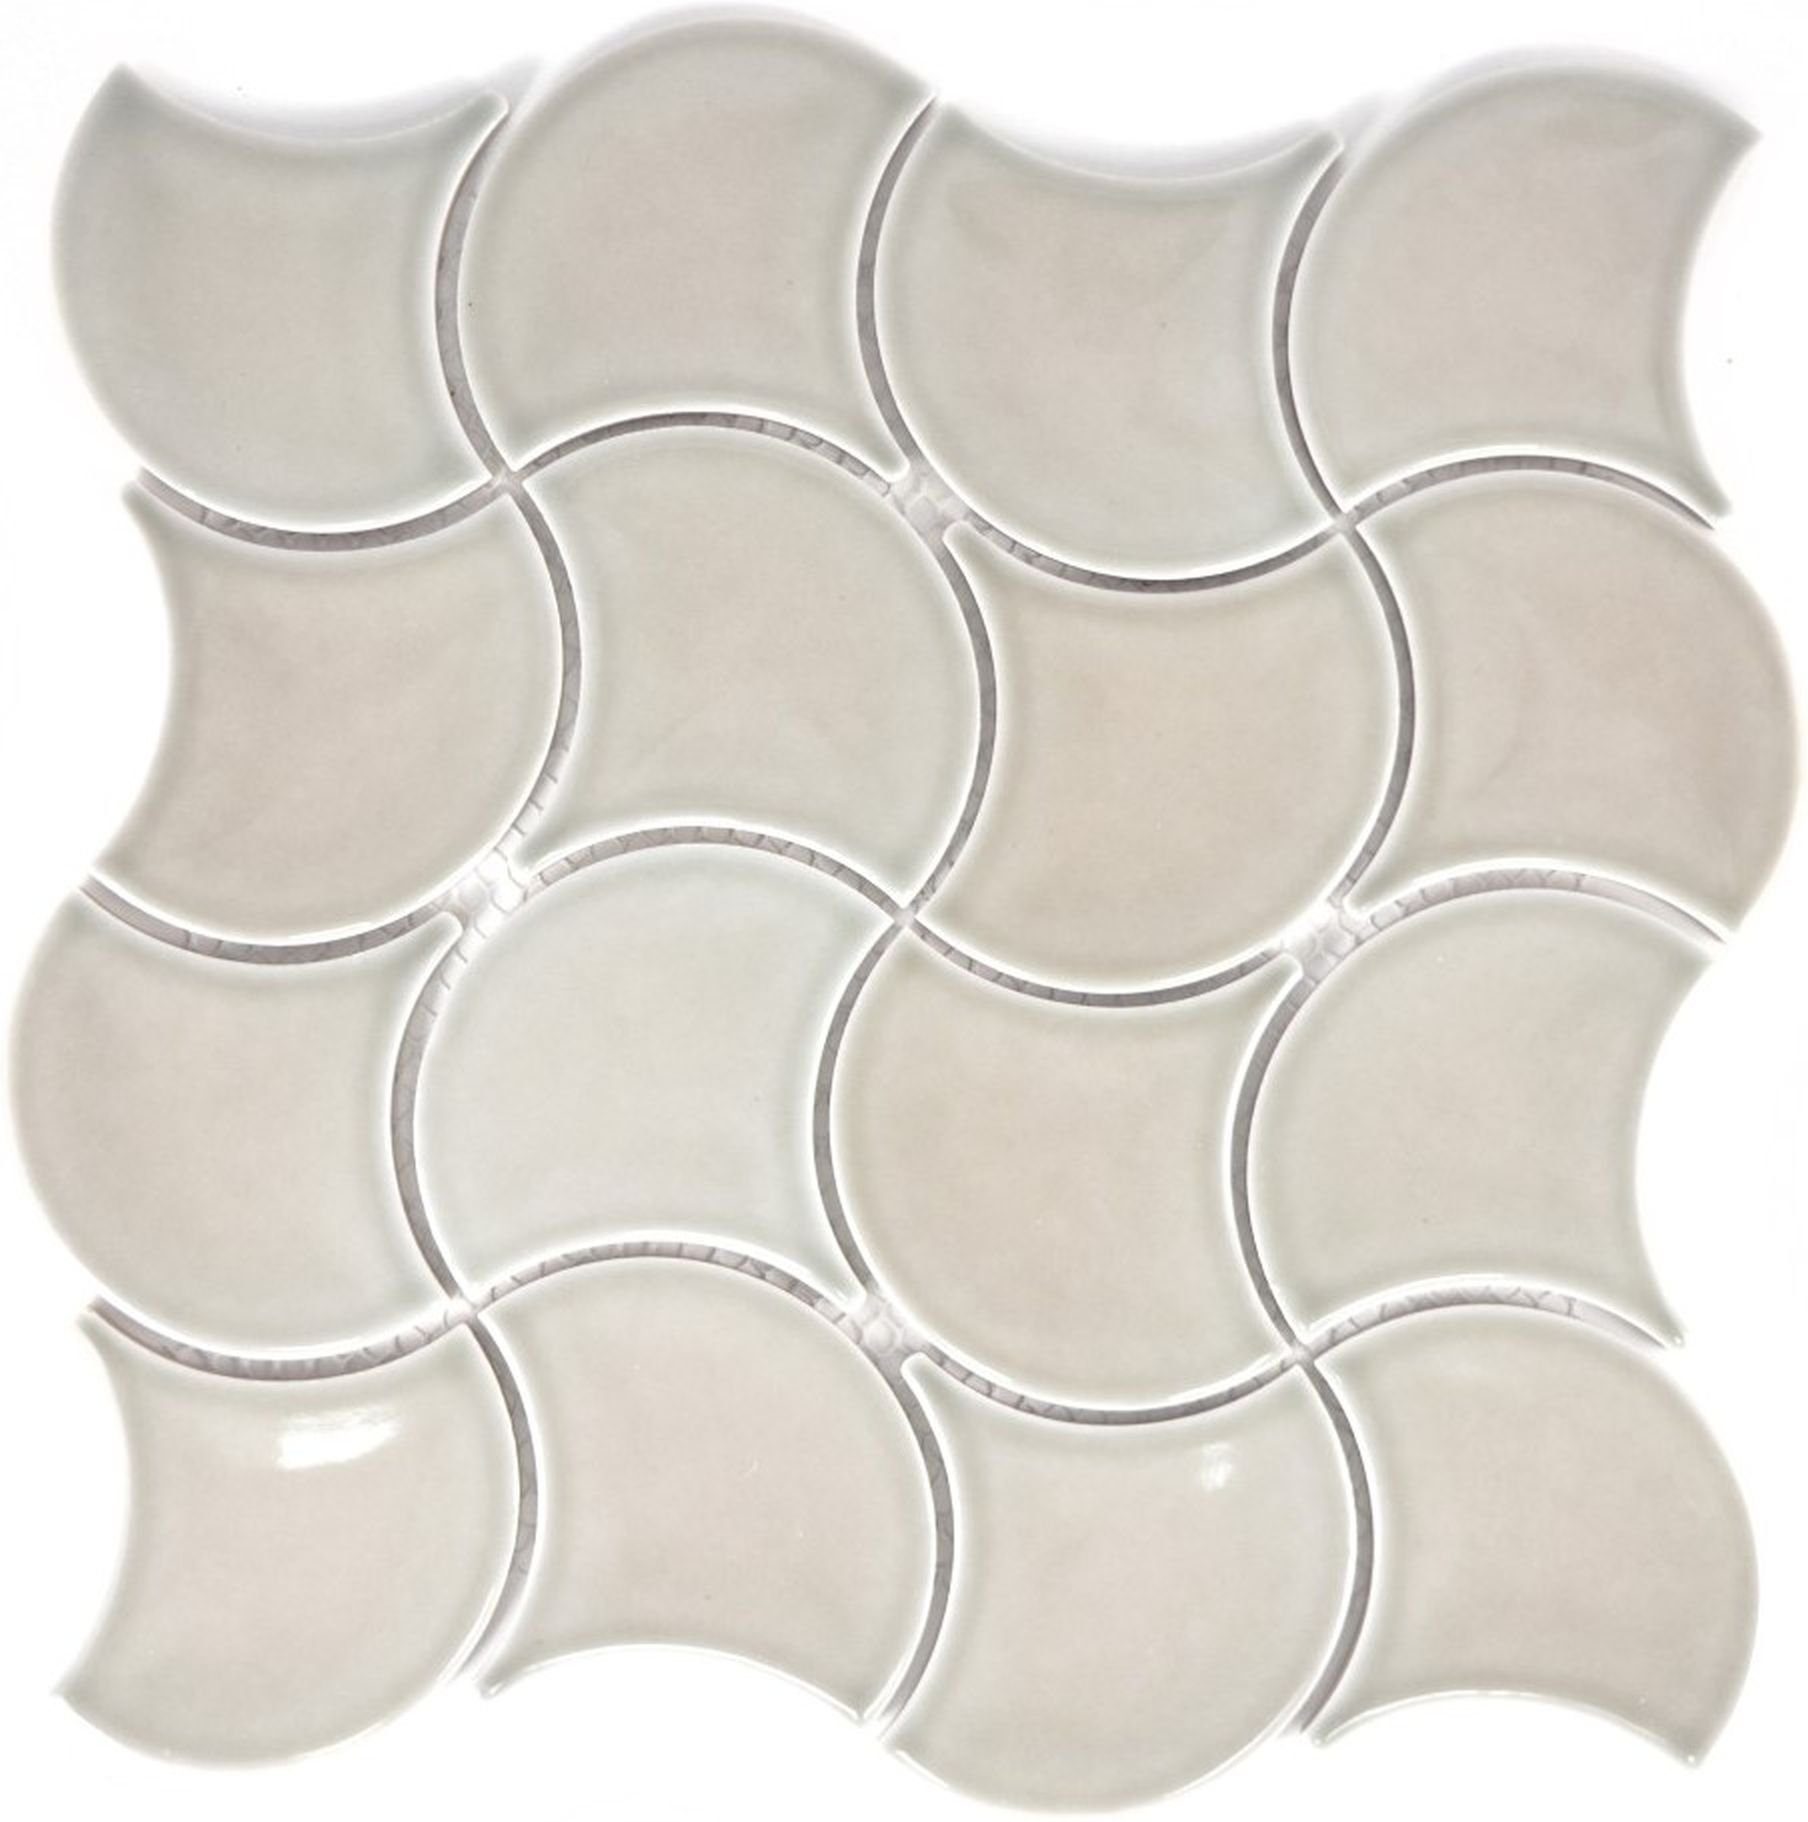 Mosani Mosaikfliesen Fächer Keramikmosaik Mosaikfliesen grau glänzend / 10 Matten